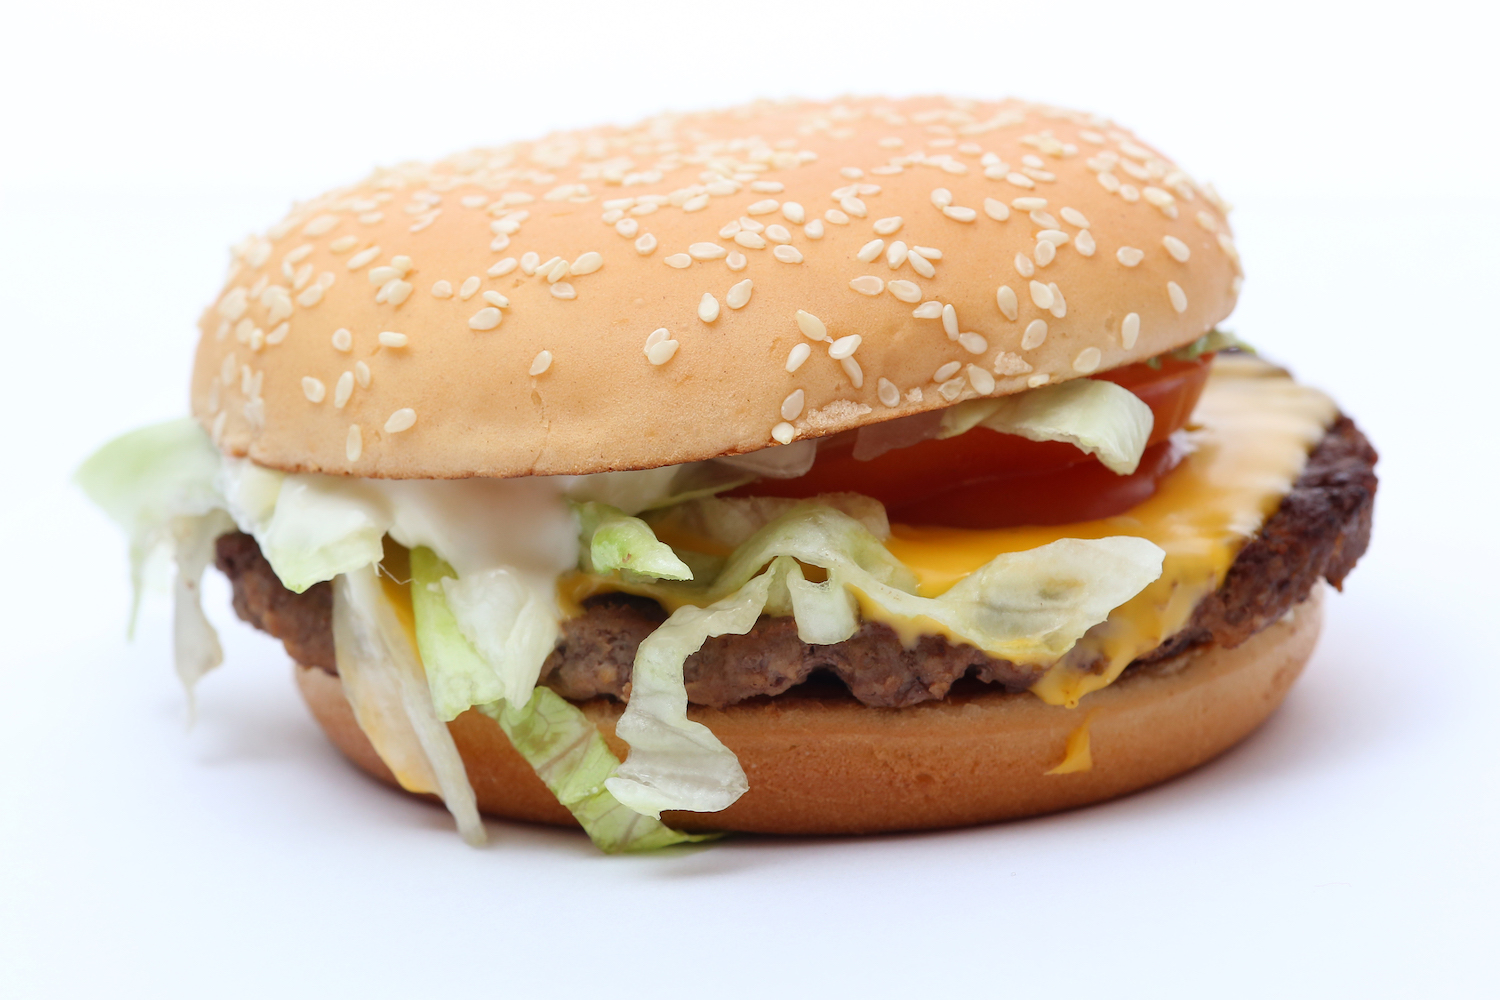 Hamburger with sesame bun